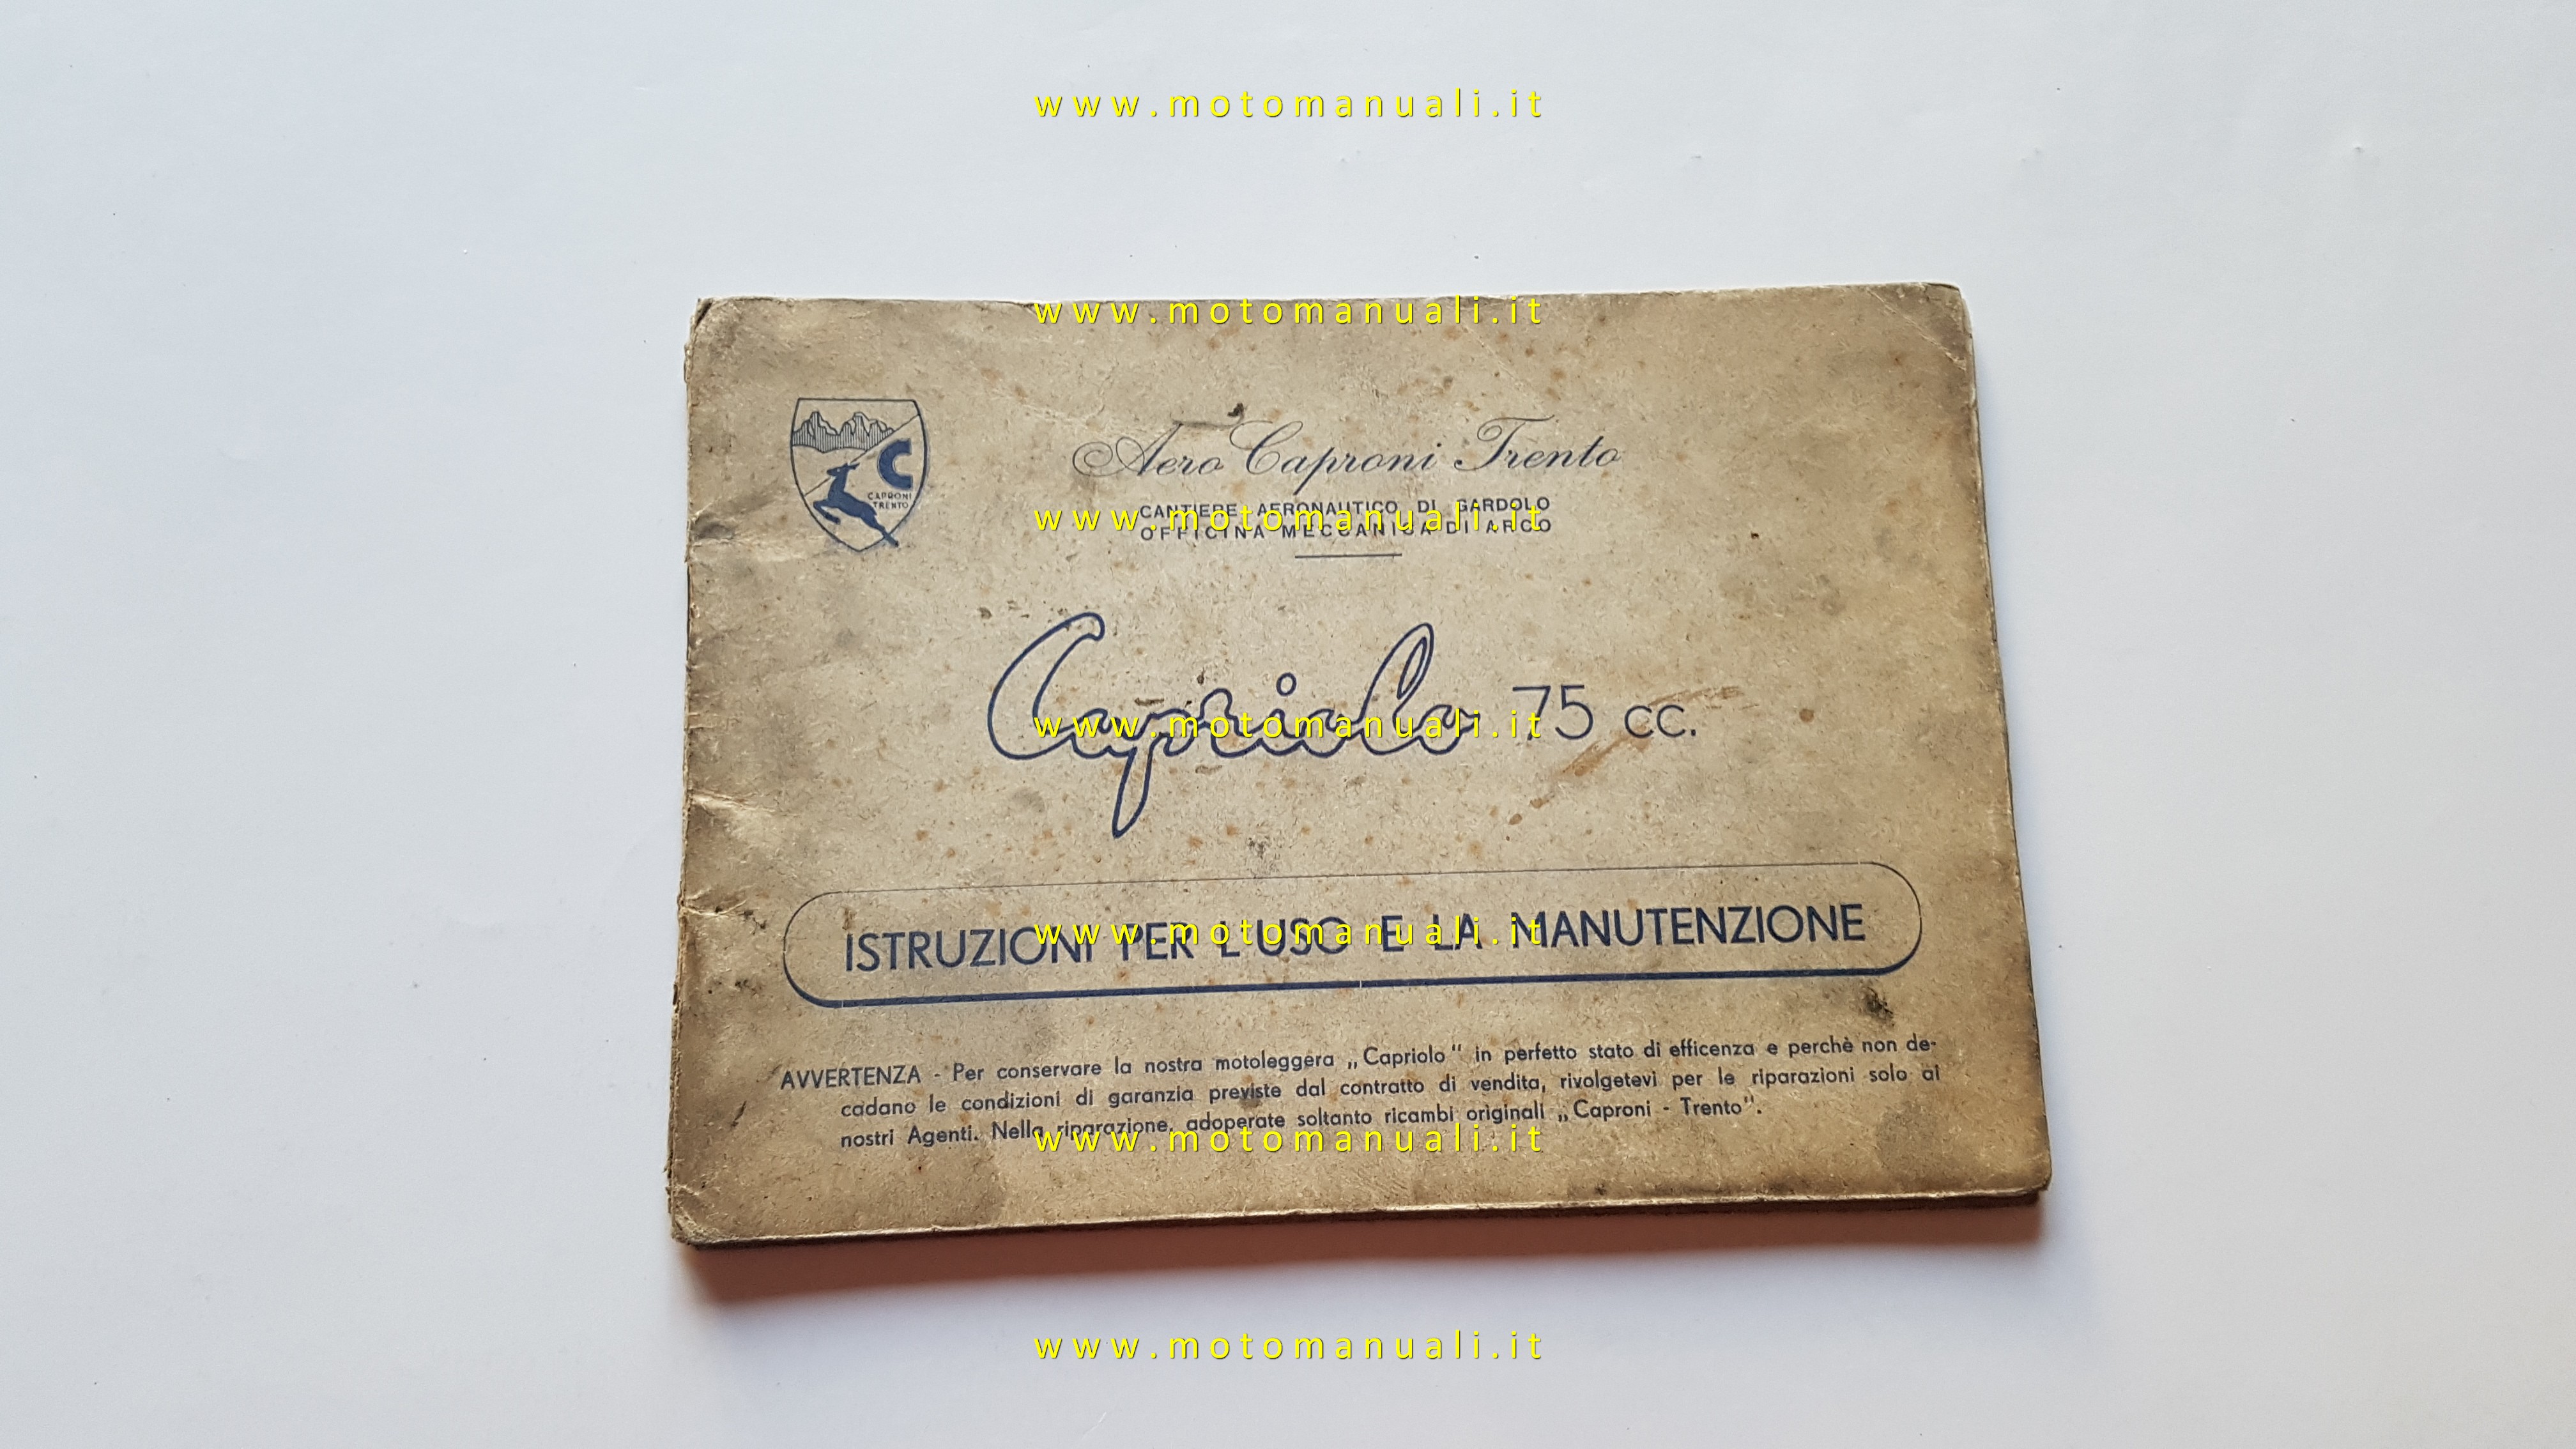 Aerocaproni Capriolo 75 manuale uso + catalogo ricambi